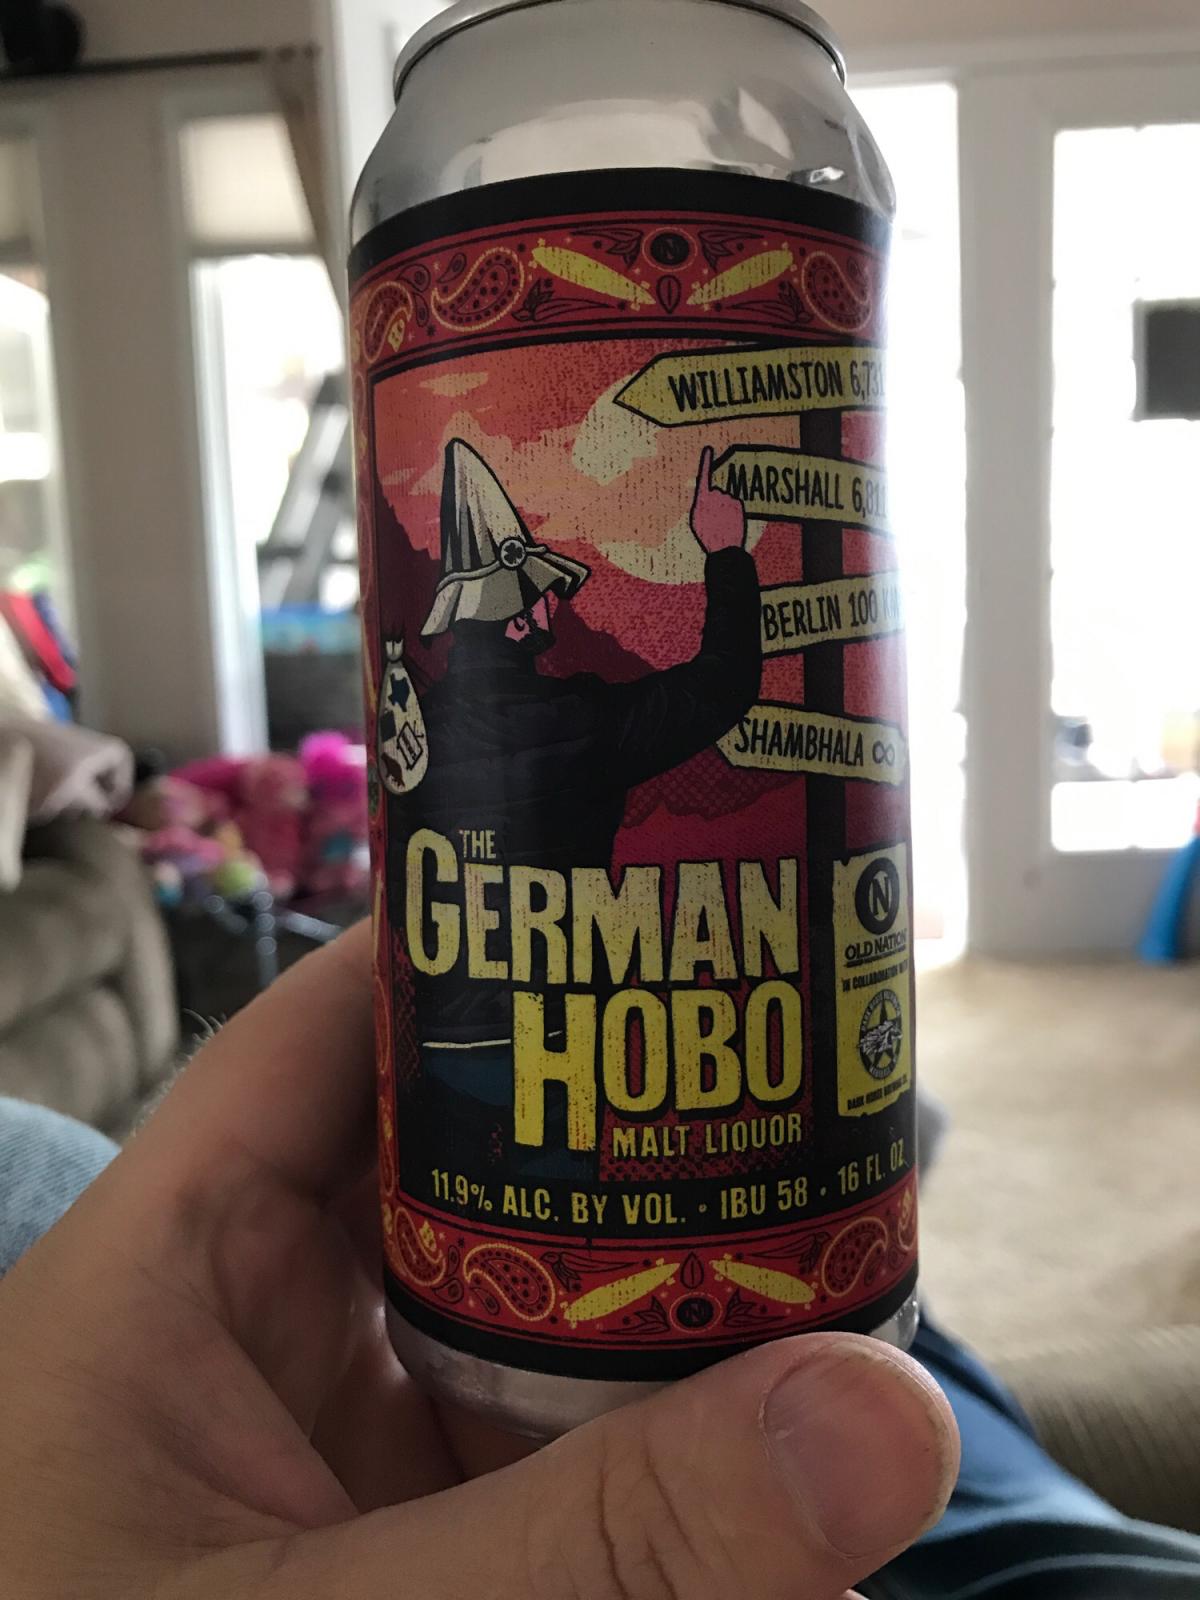 The German Hobo